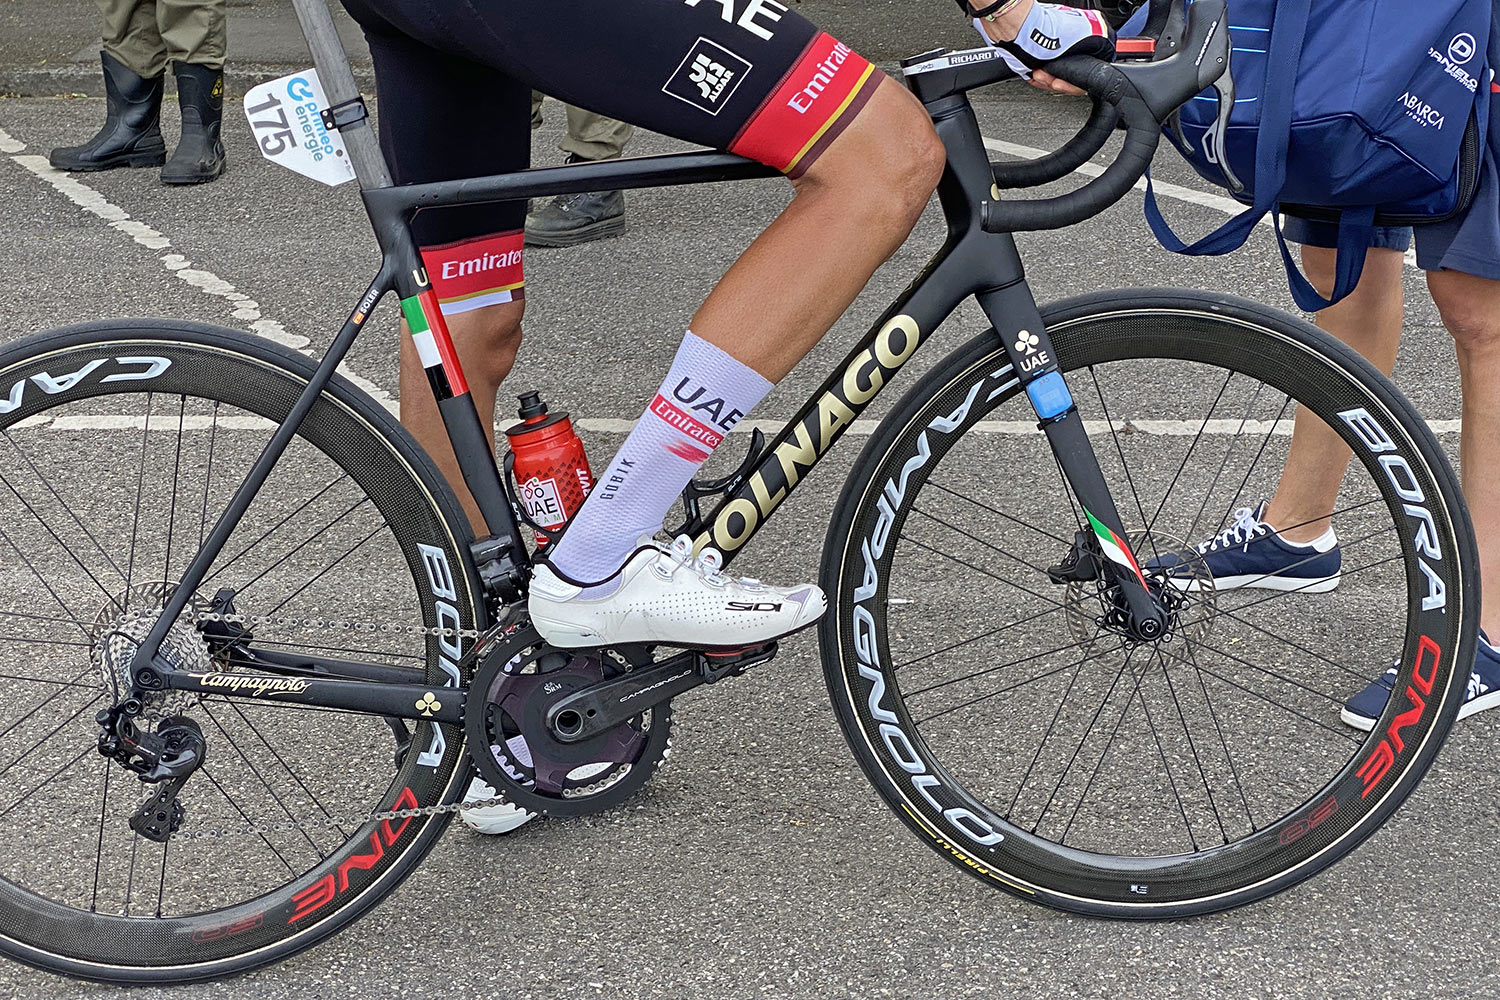 Colnago V3Rs Tour de Suisse Pro Road Bike Check UAE Team Emirates